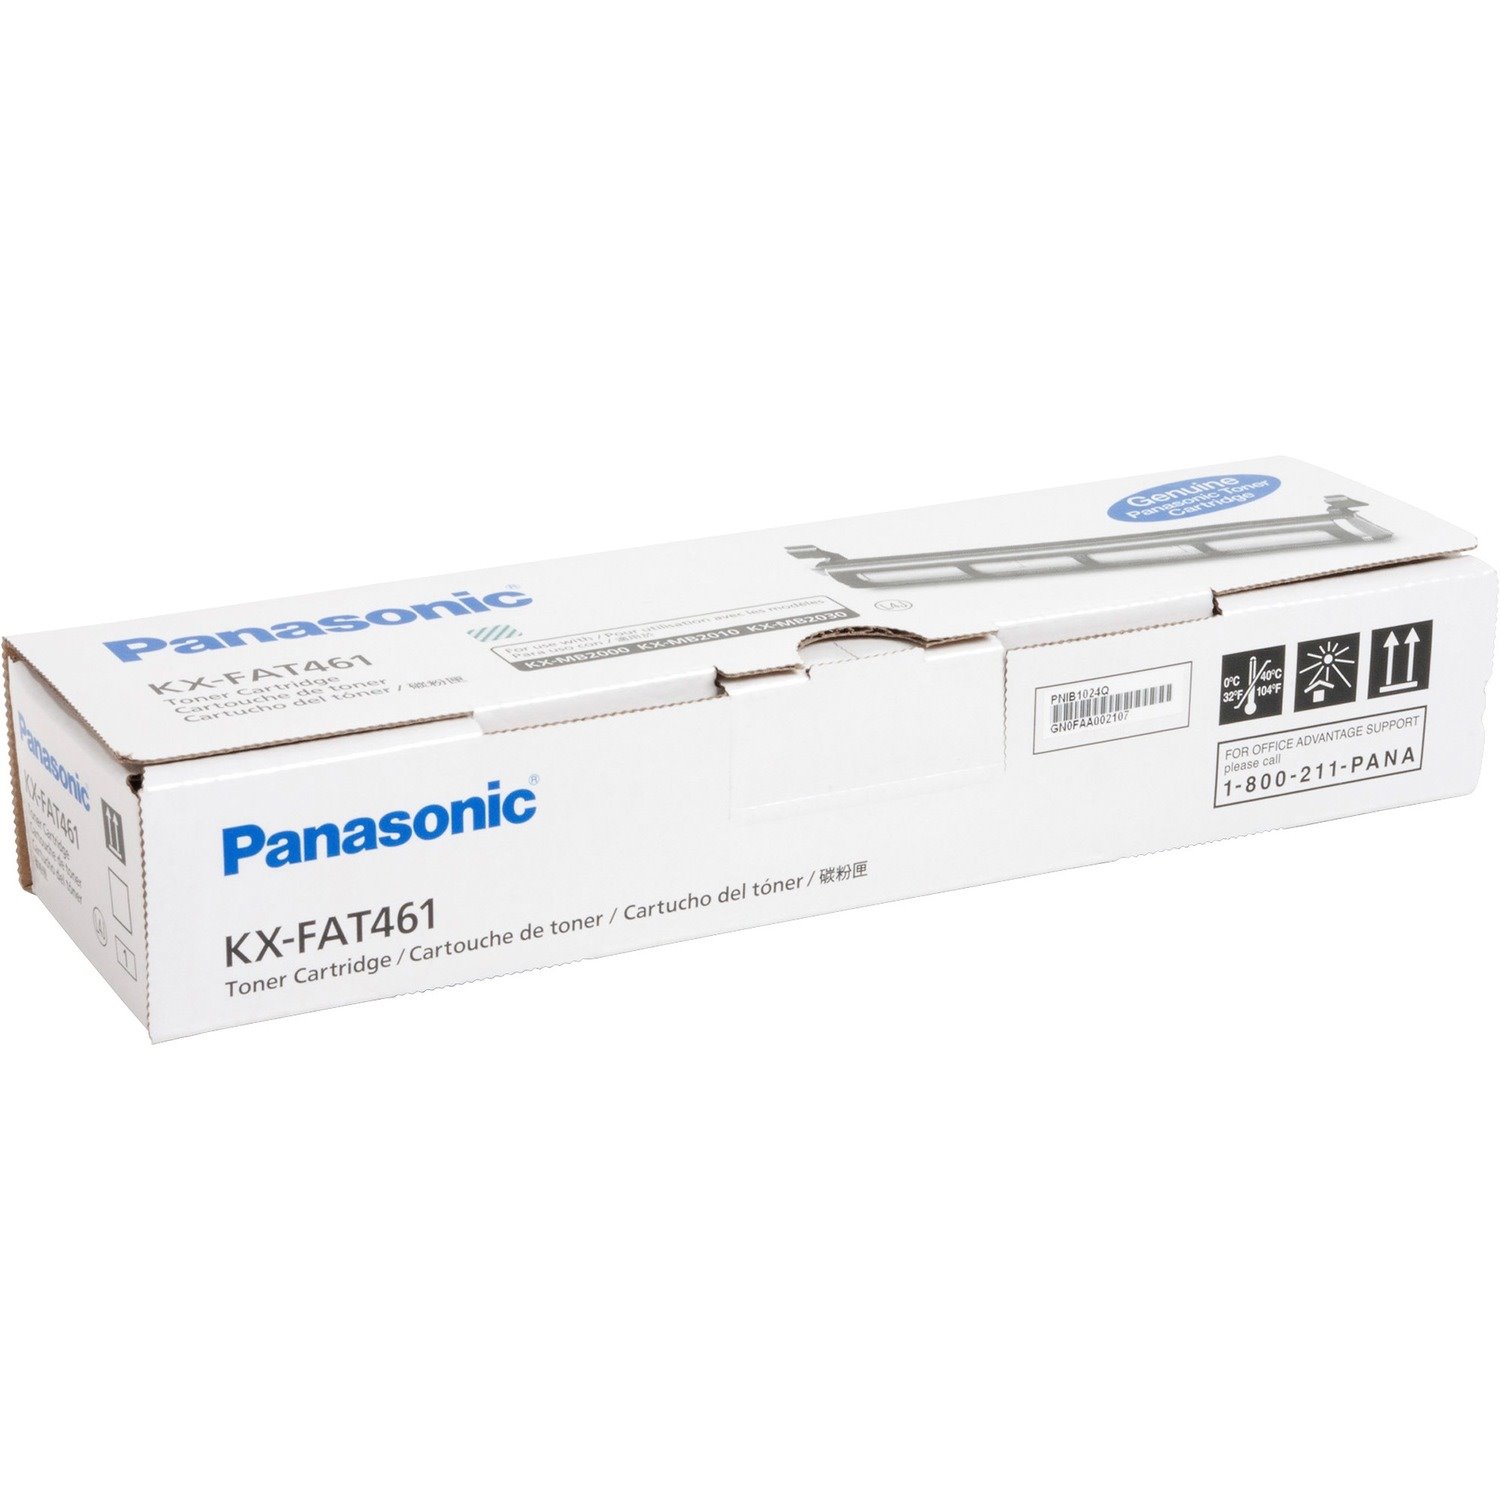 Panasonic KX-FAT461 Original Toner Cartridge